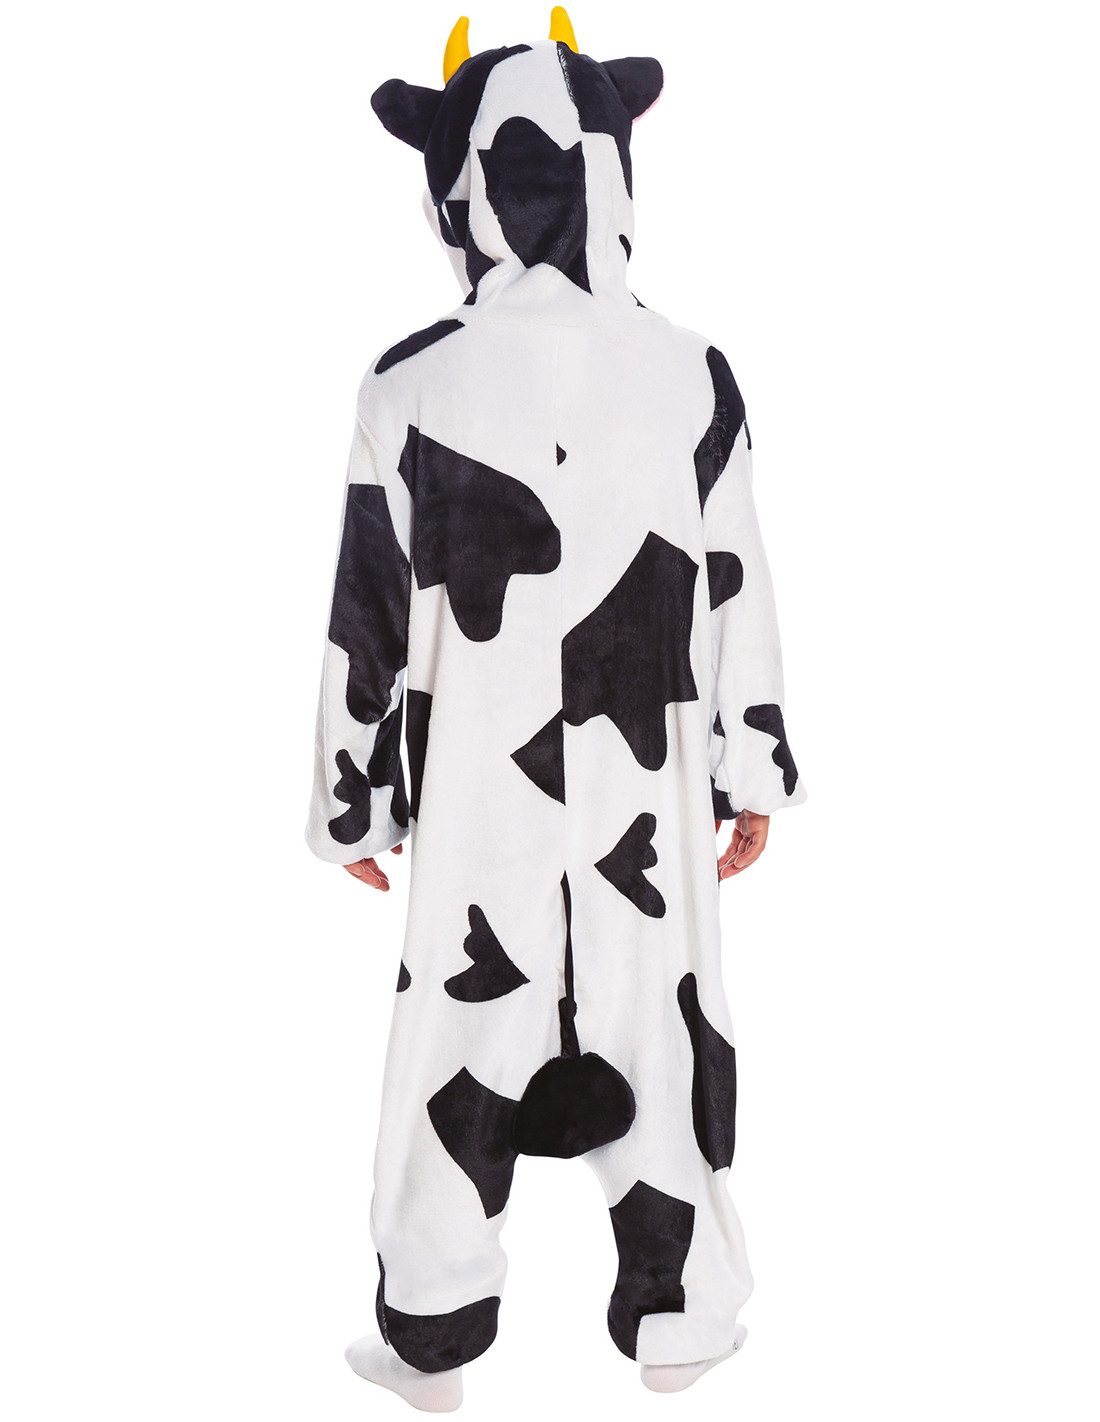 Disfraz de animal con temática de selva para niñas disfraz de vaca